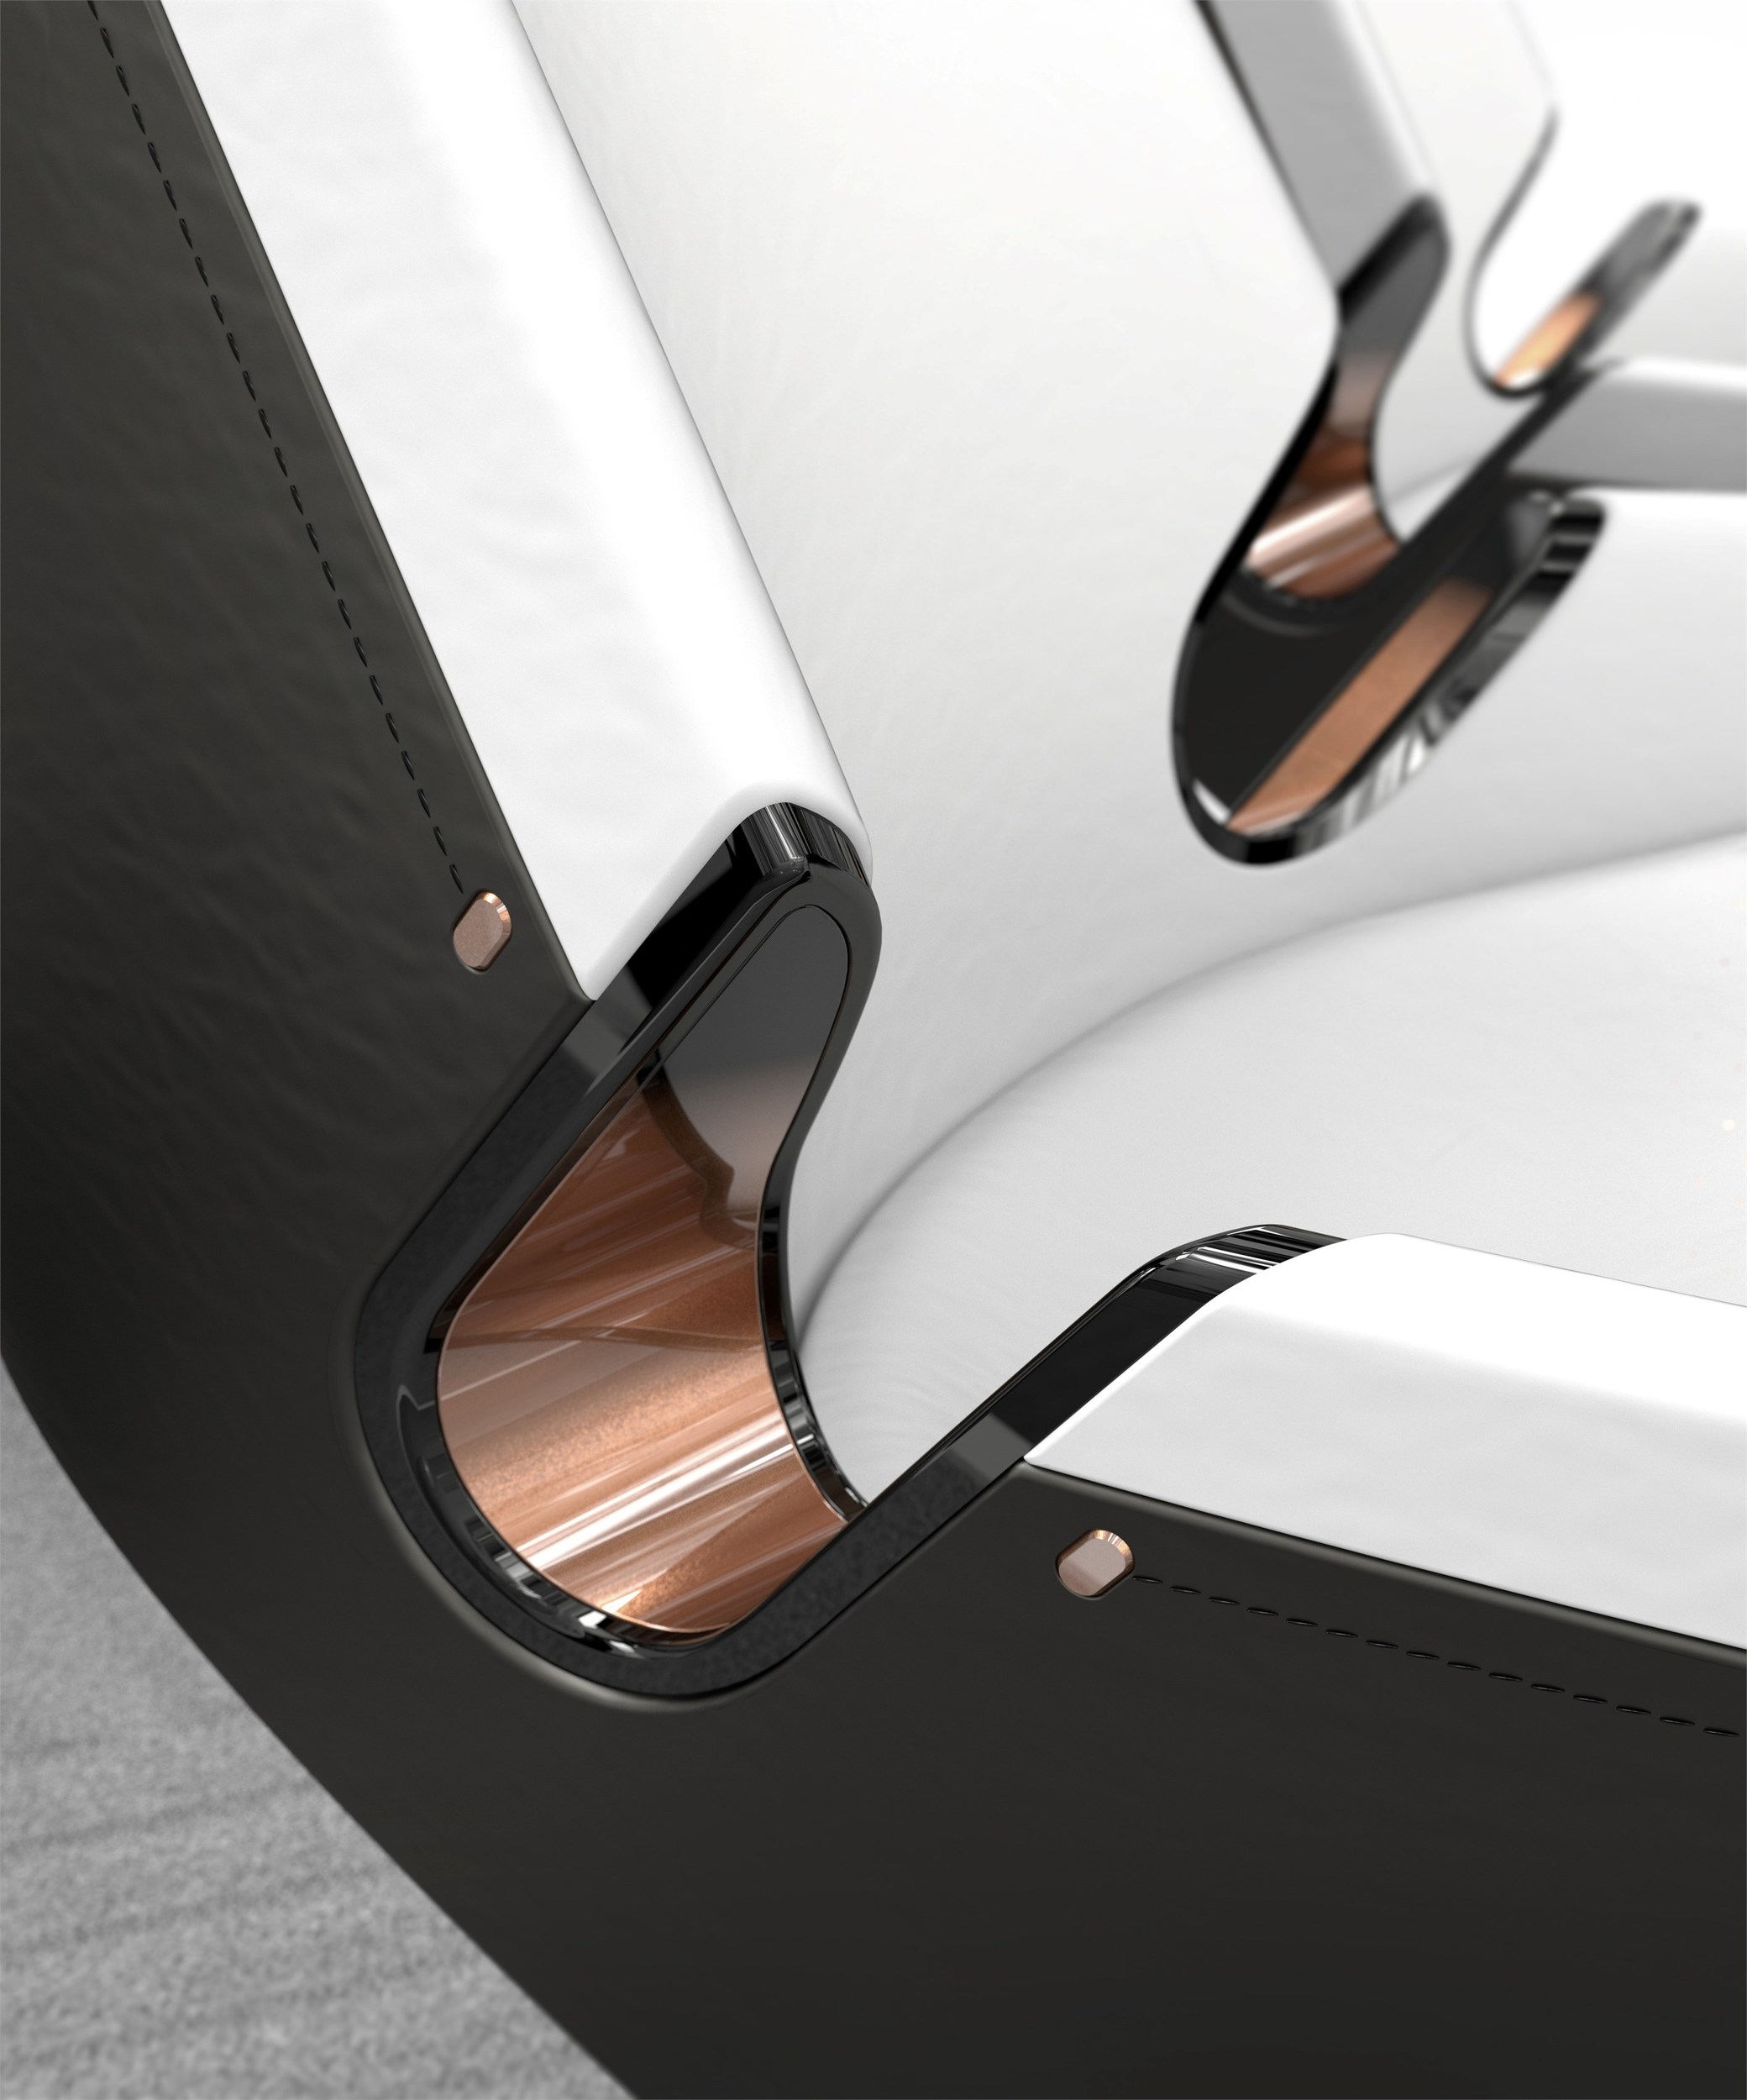 Nissan IMx Concept, 2017 - Interior